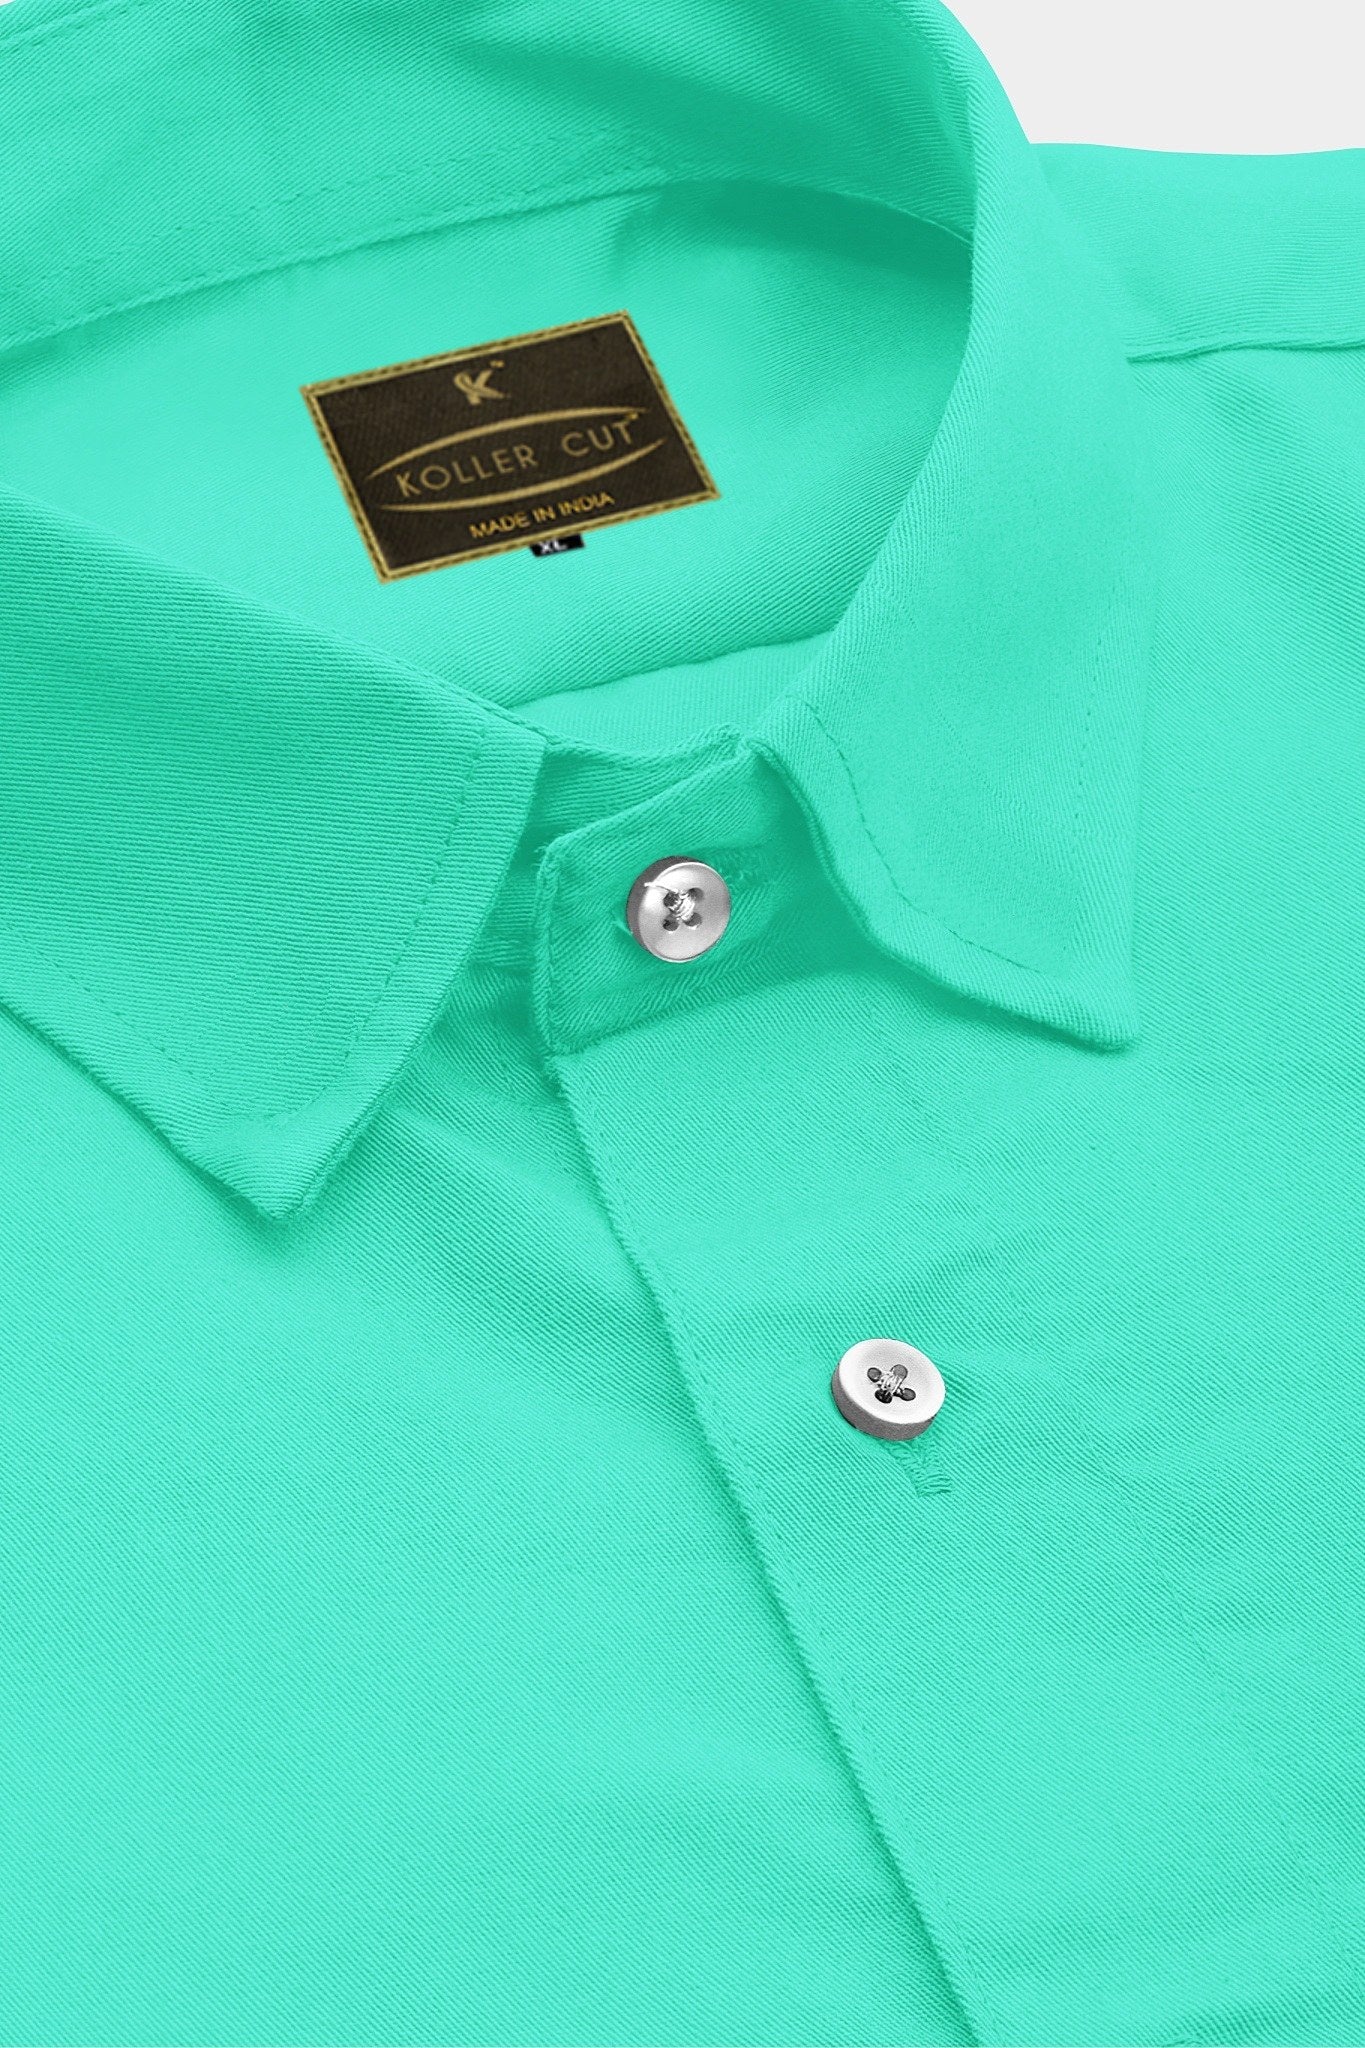 Aquamarine Green Solid Plain Men's Cotton Shirt